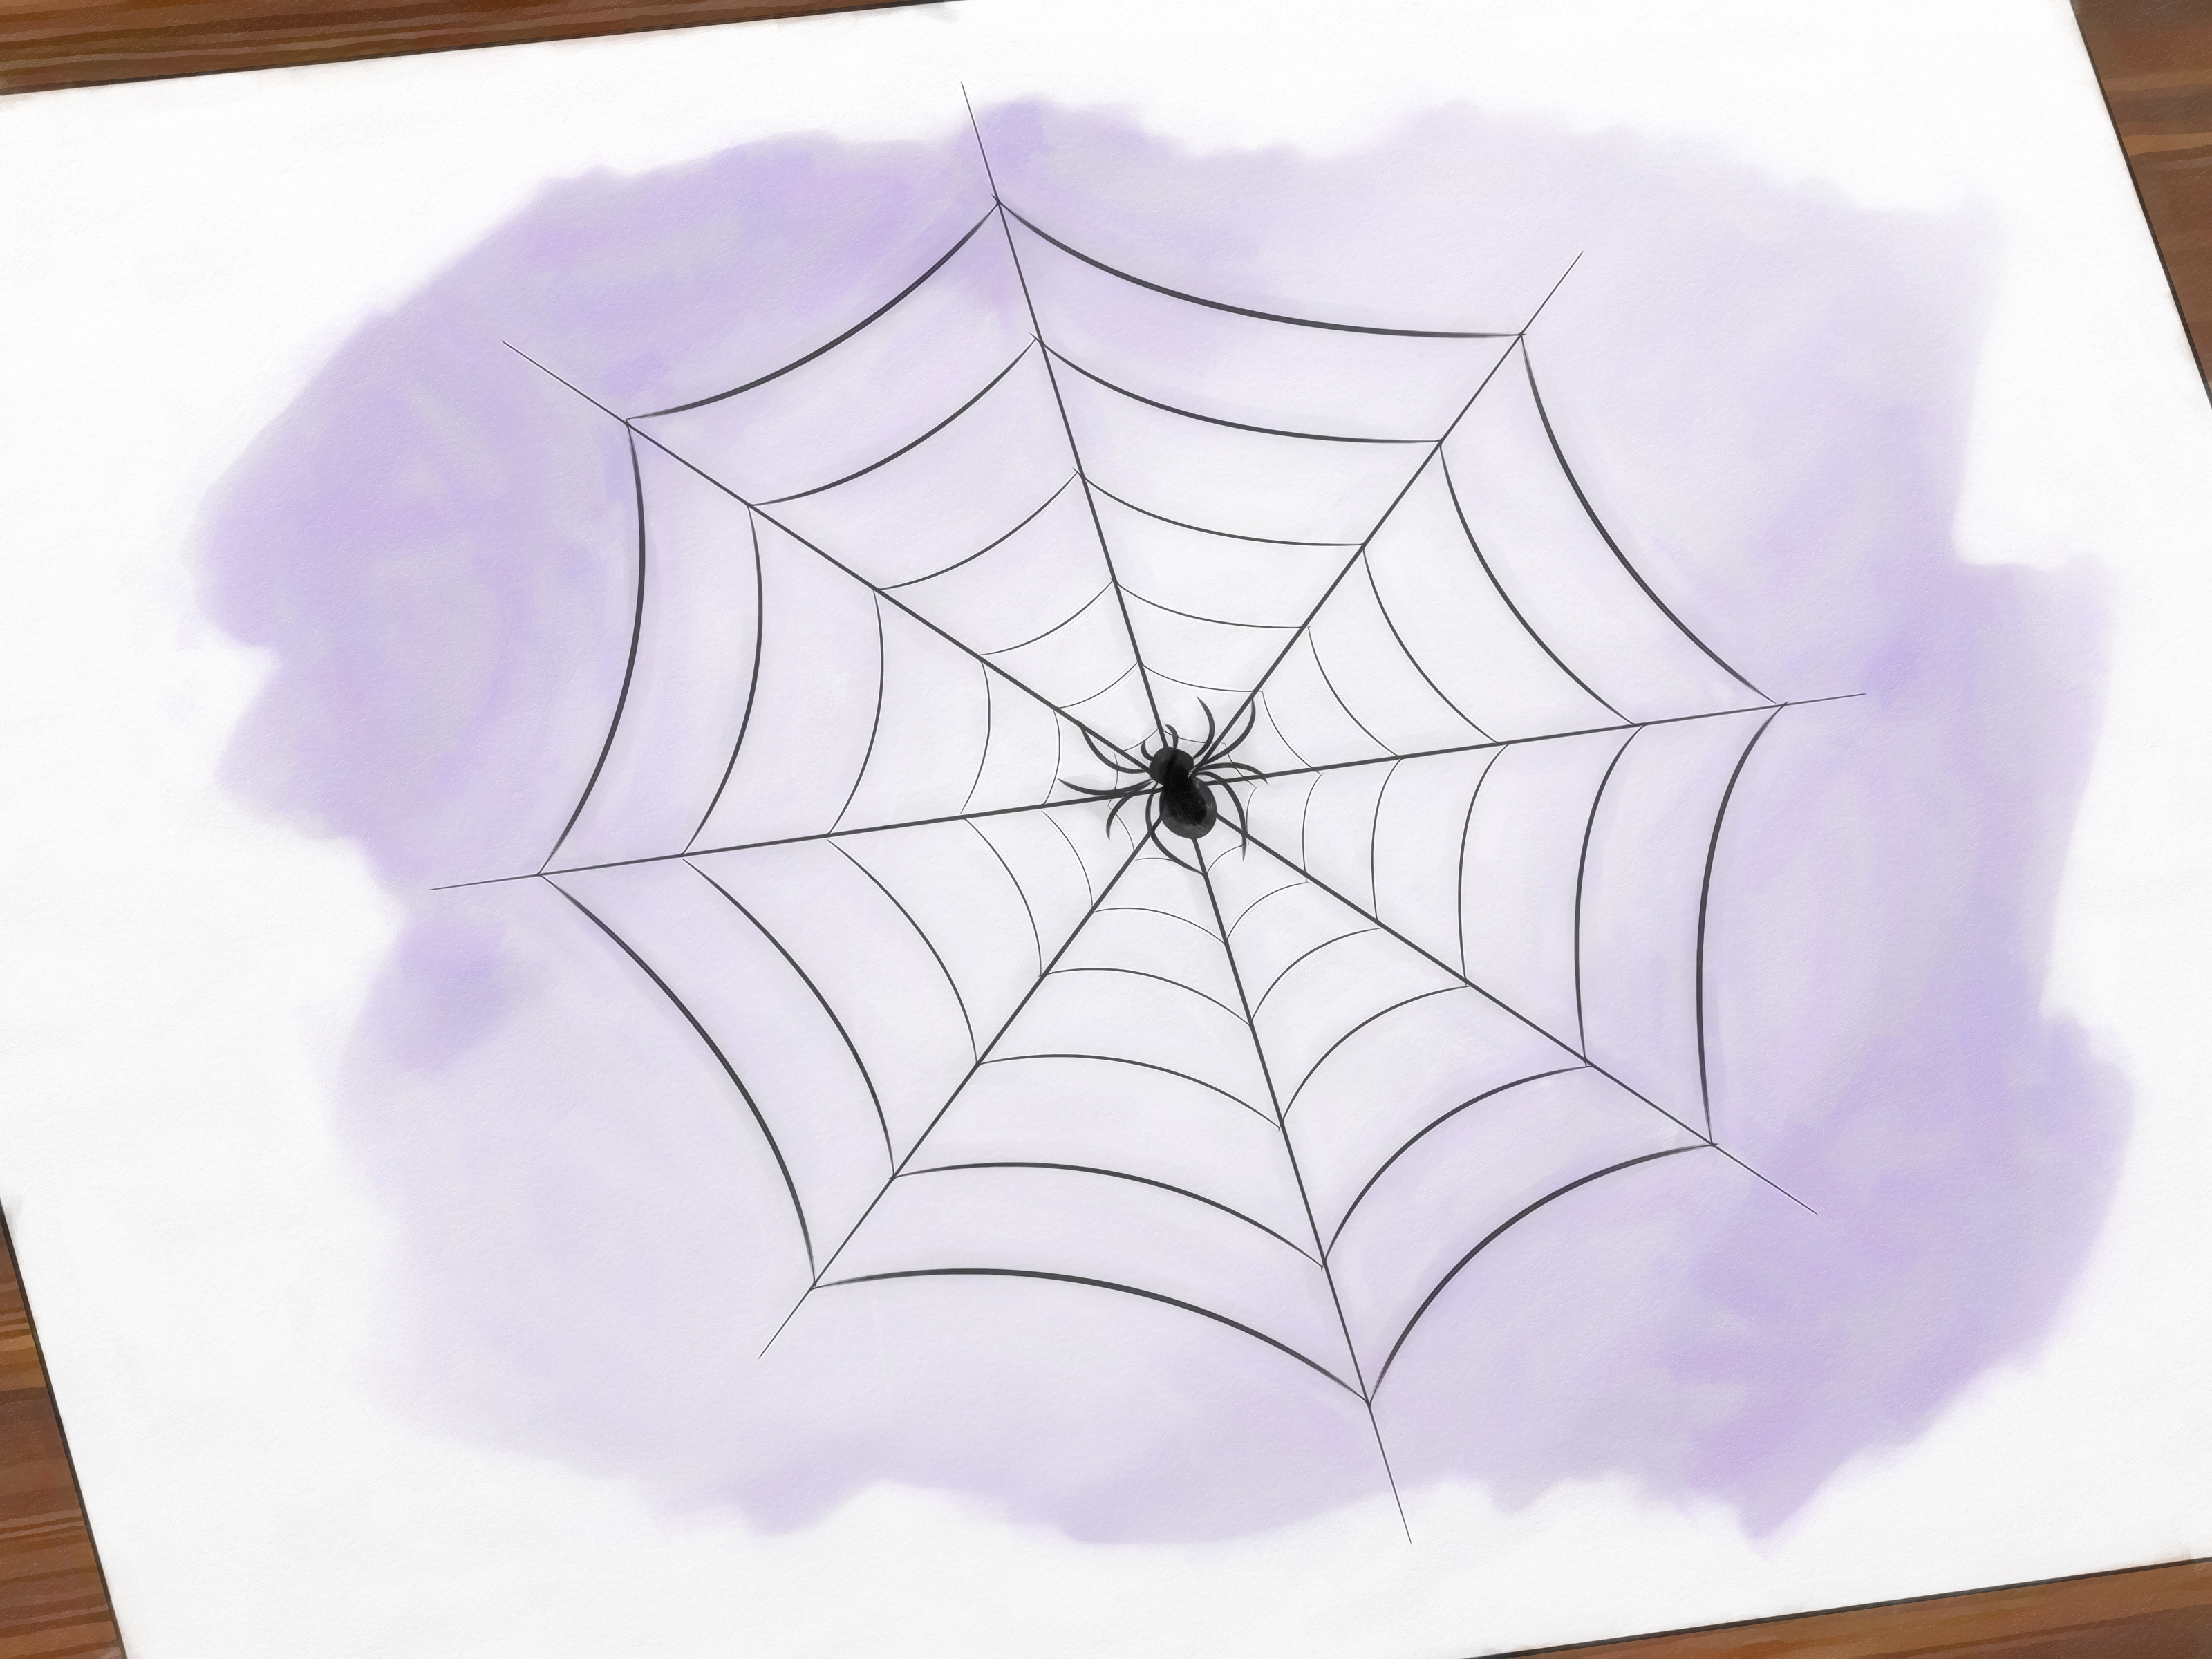 3 Ways to Draw a Spider Web - wikiHow